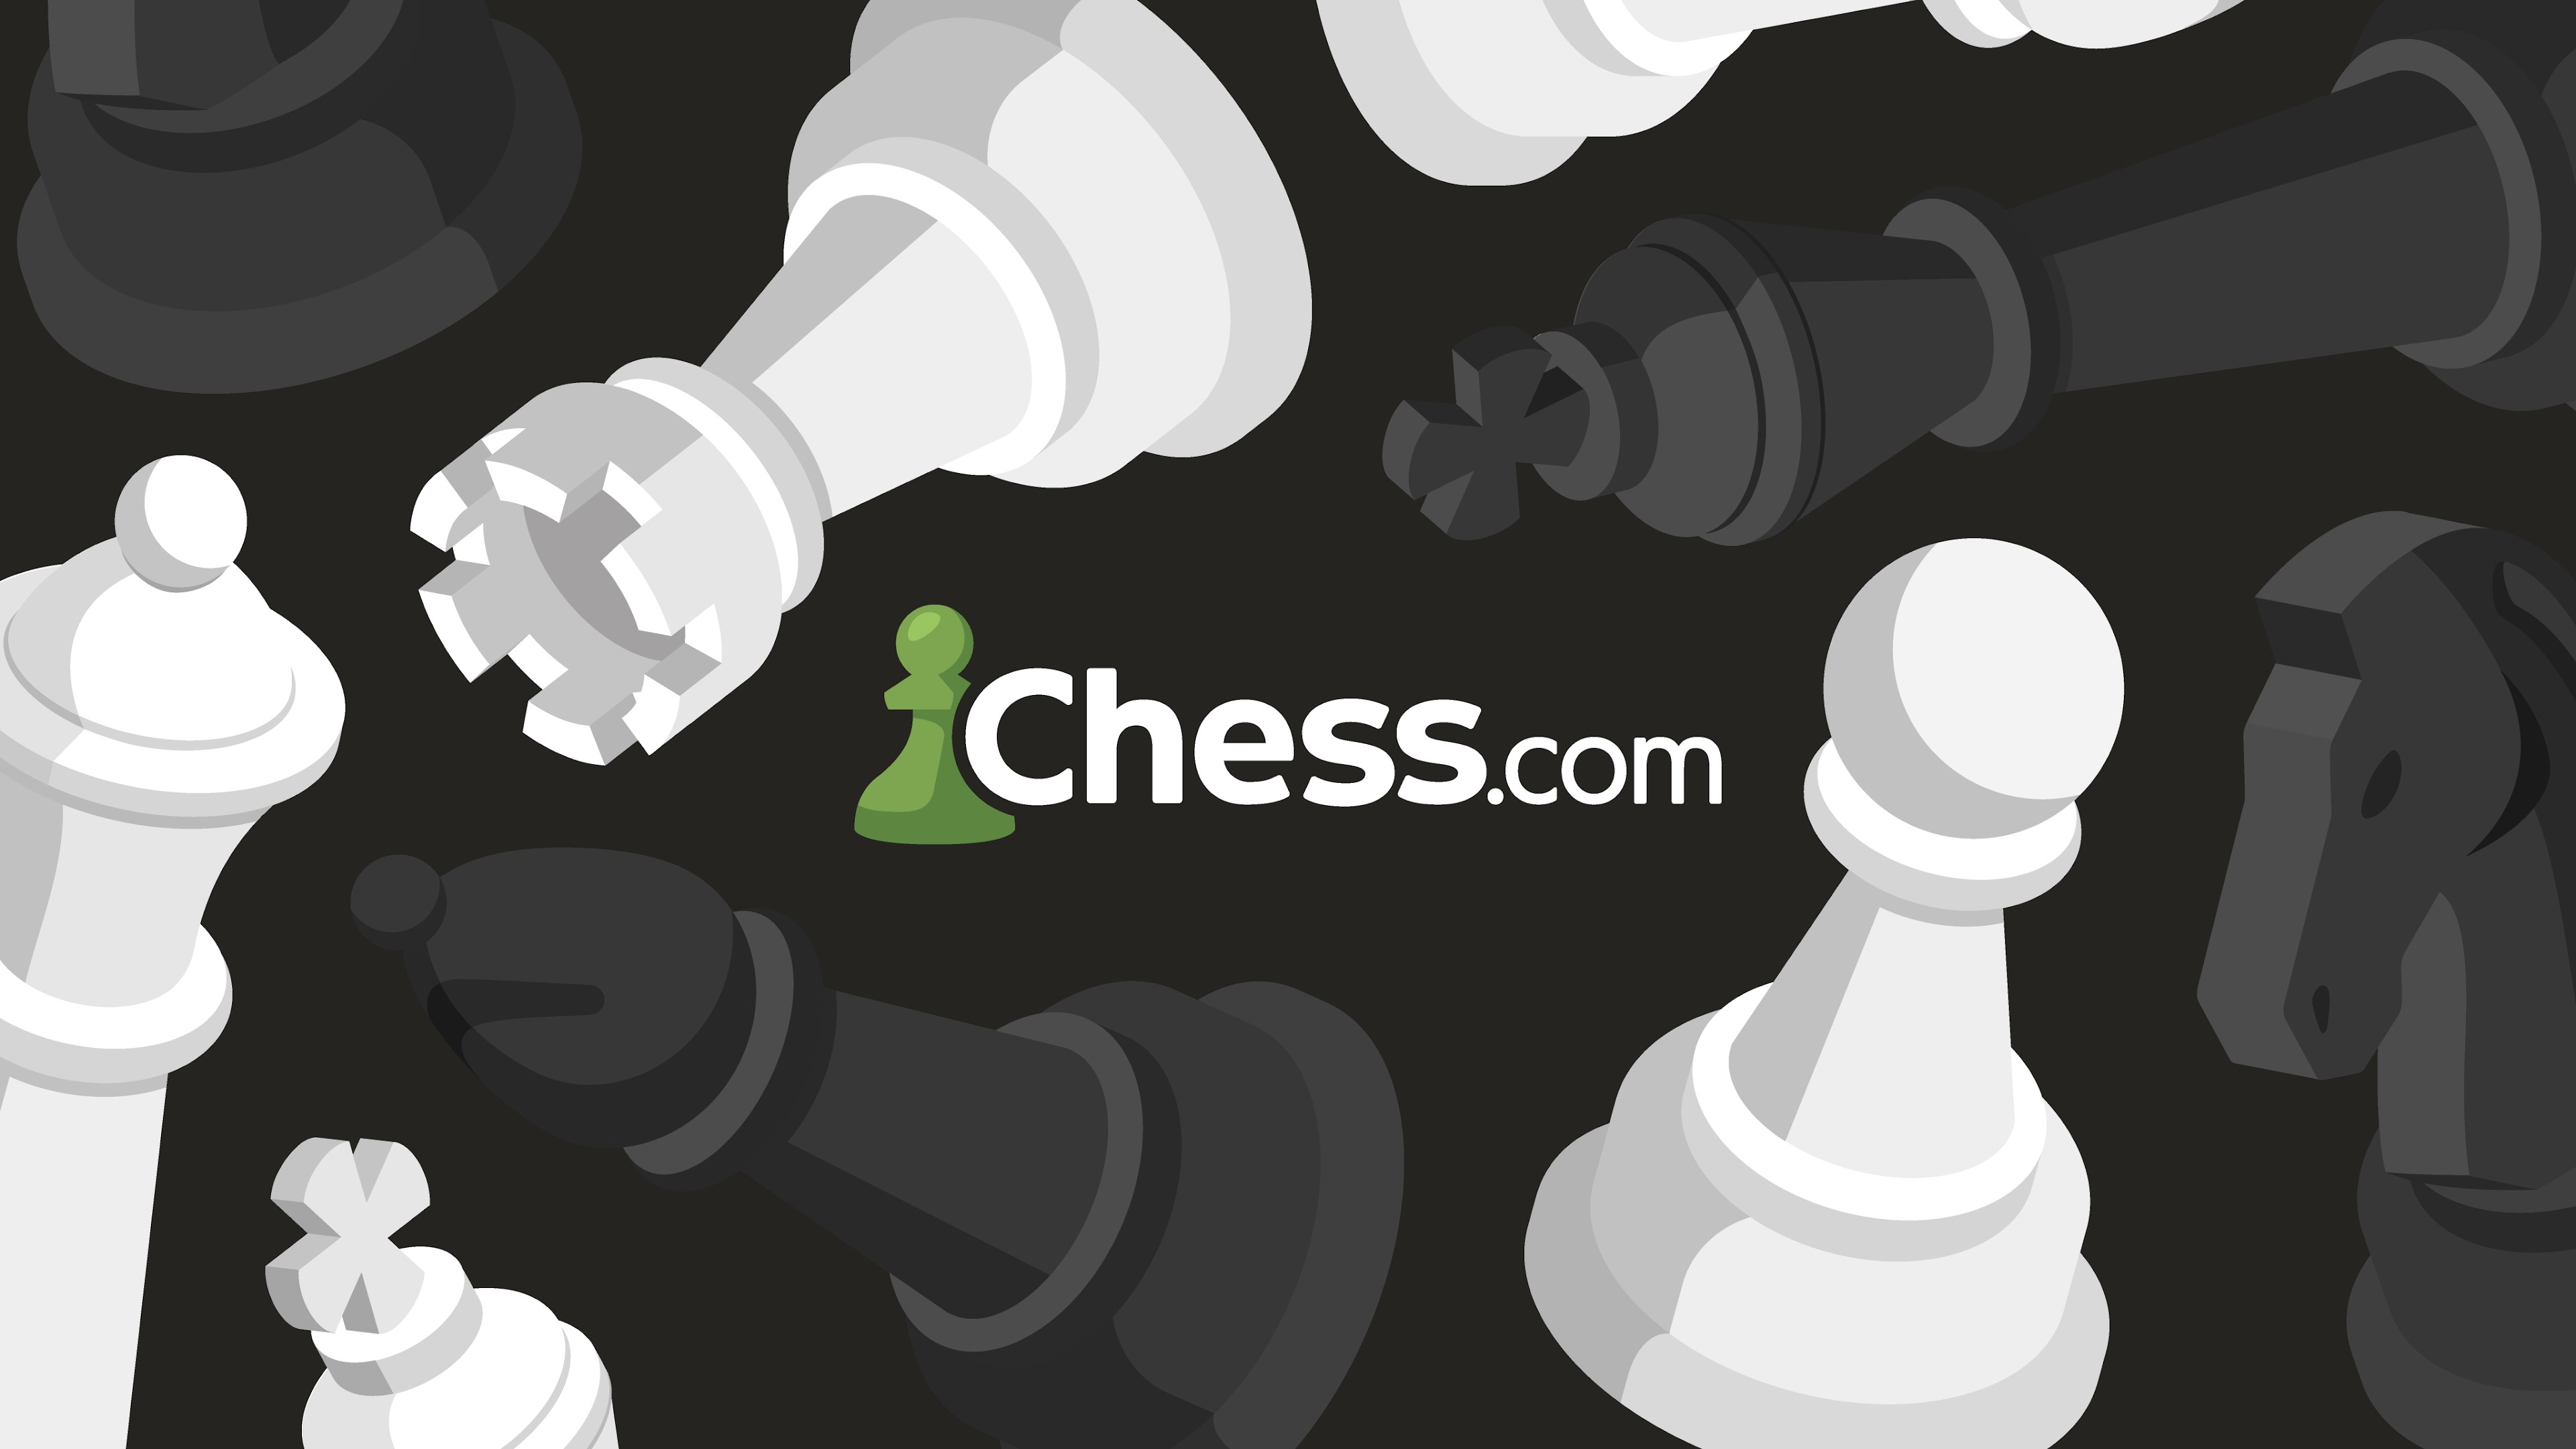 Chess.com - Happy Birthday to the internet's chess